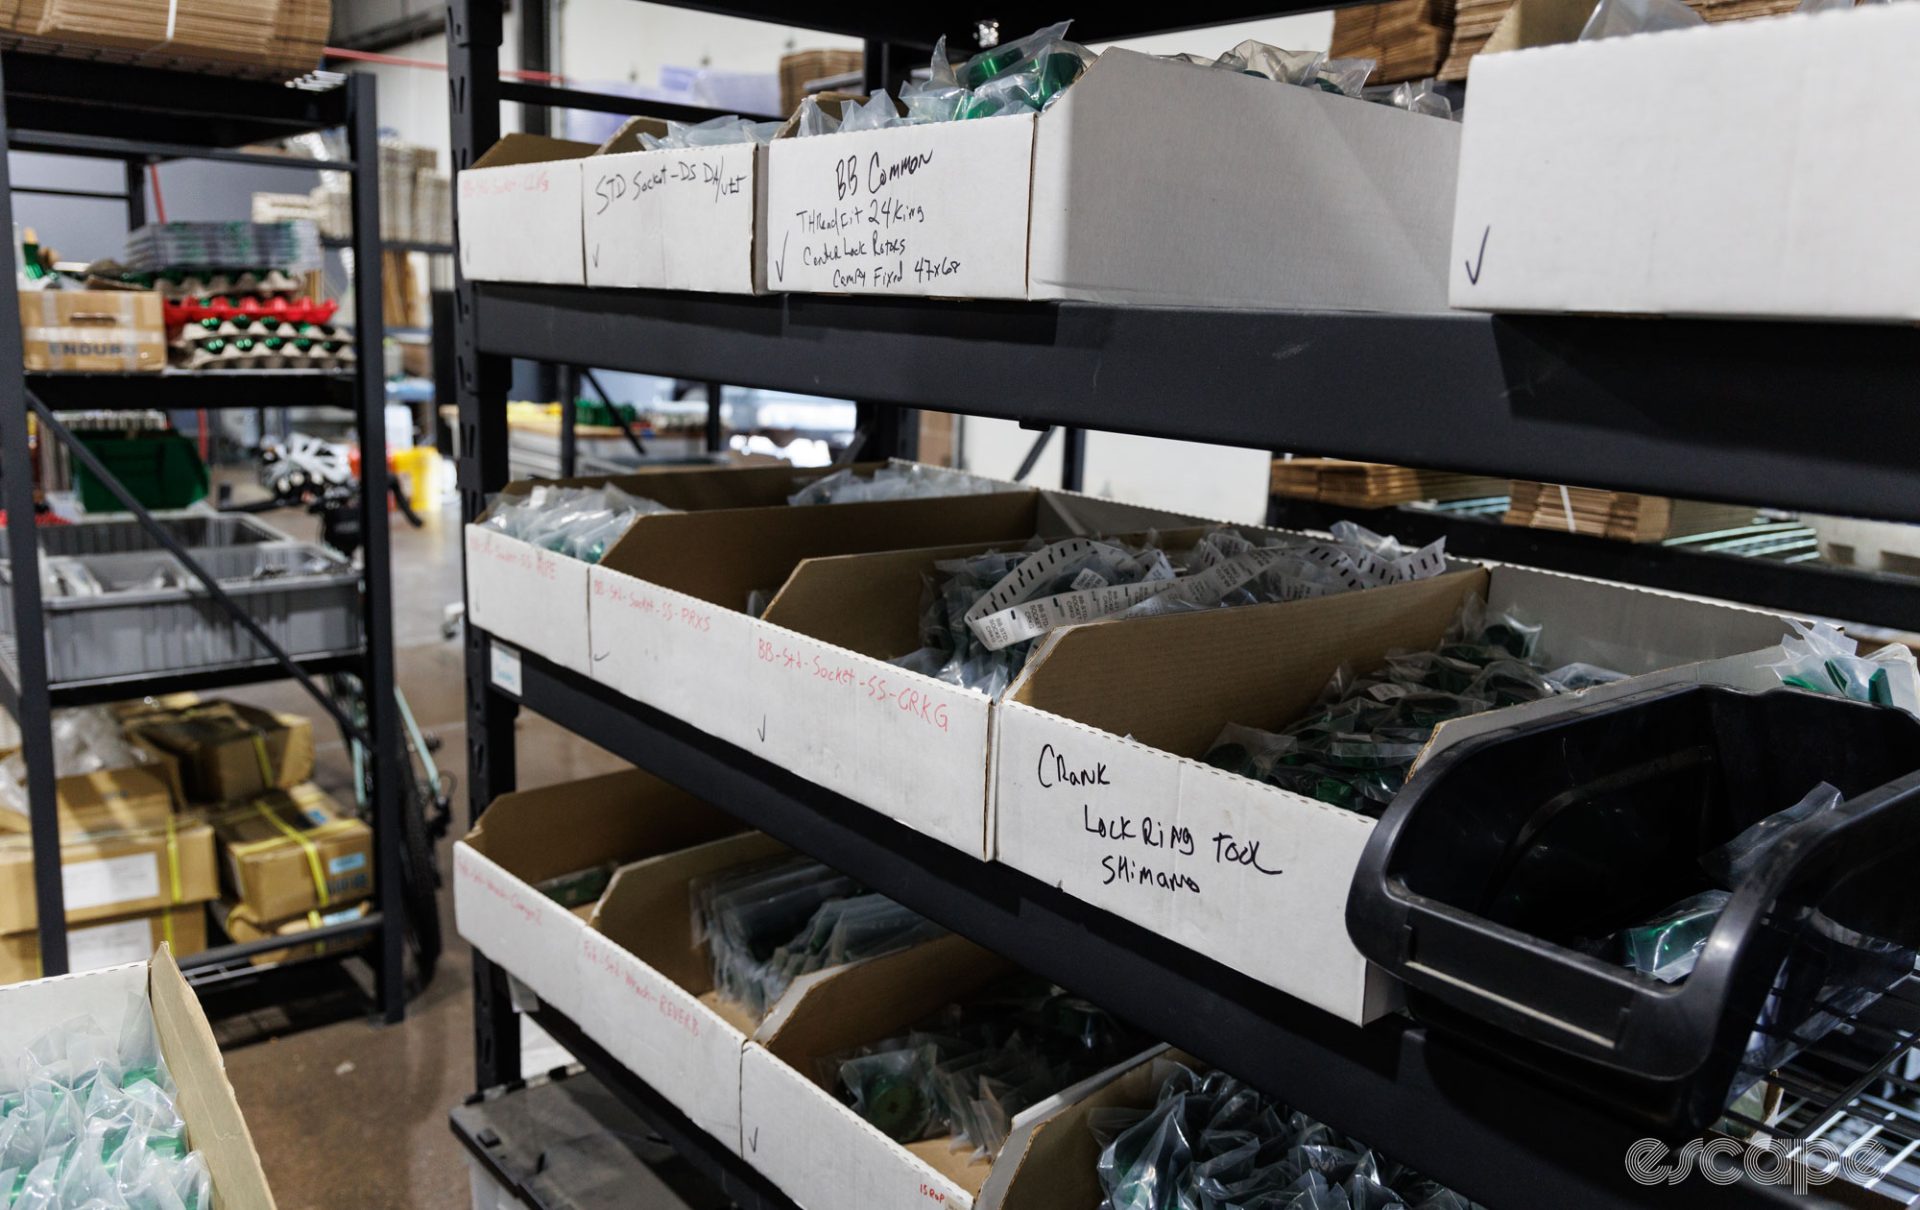 The photo shows shelves of bottom bracket sockets in Abbey Bike Tools' warehouse.